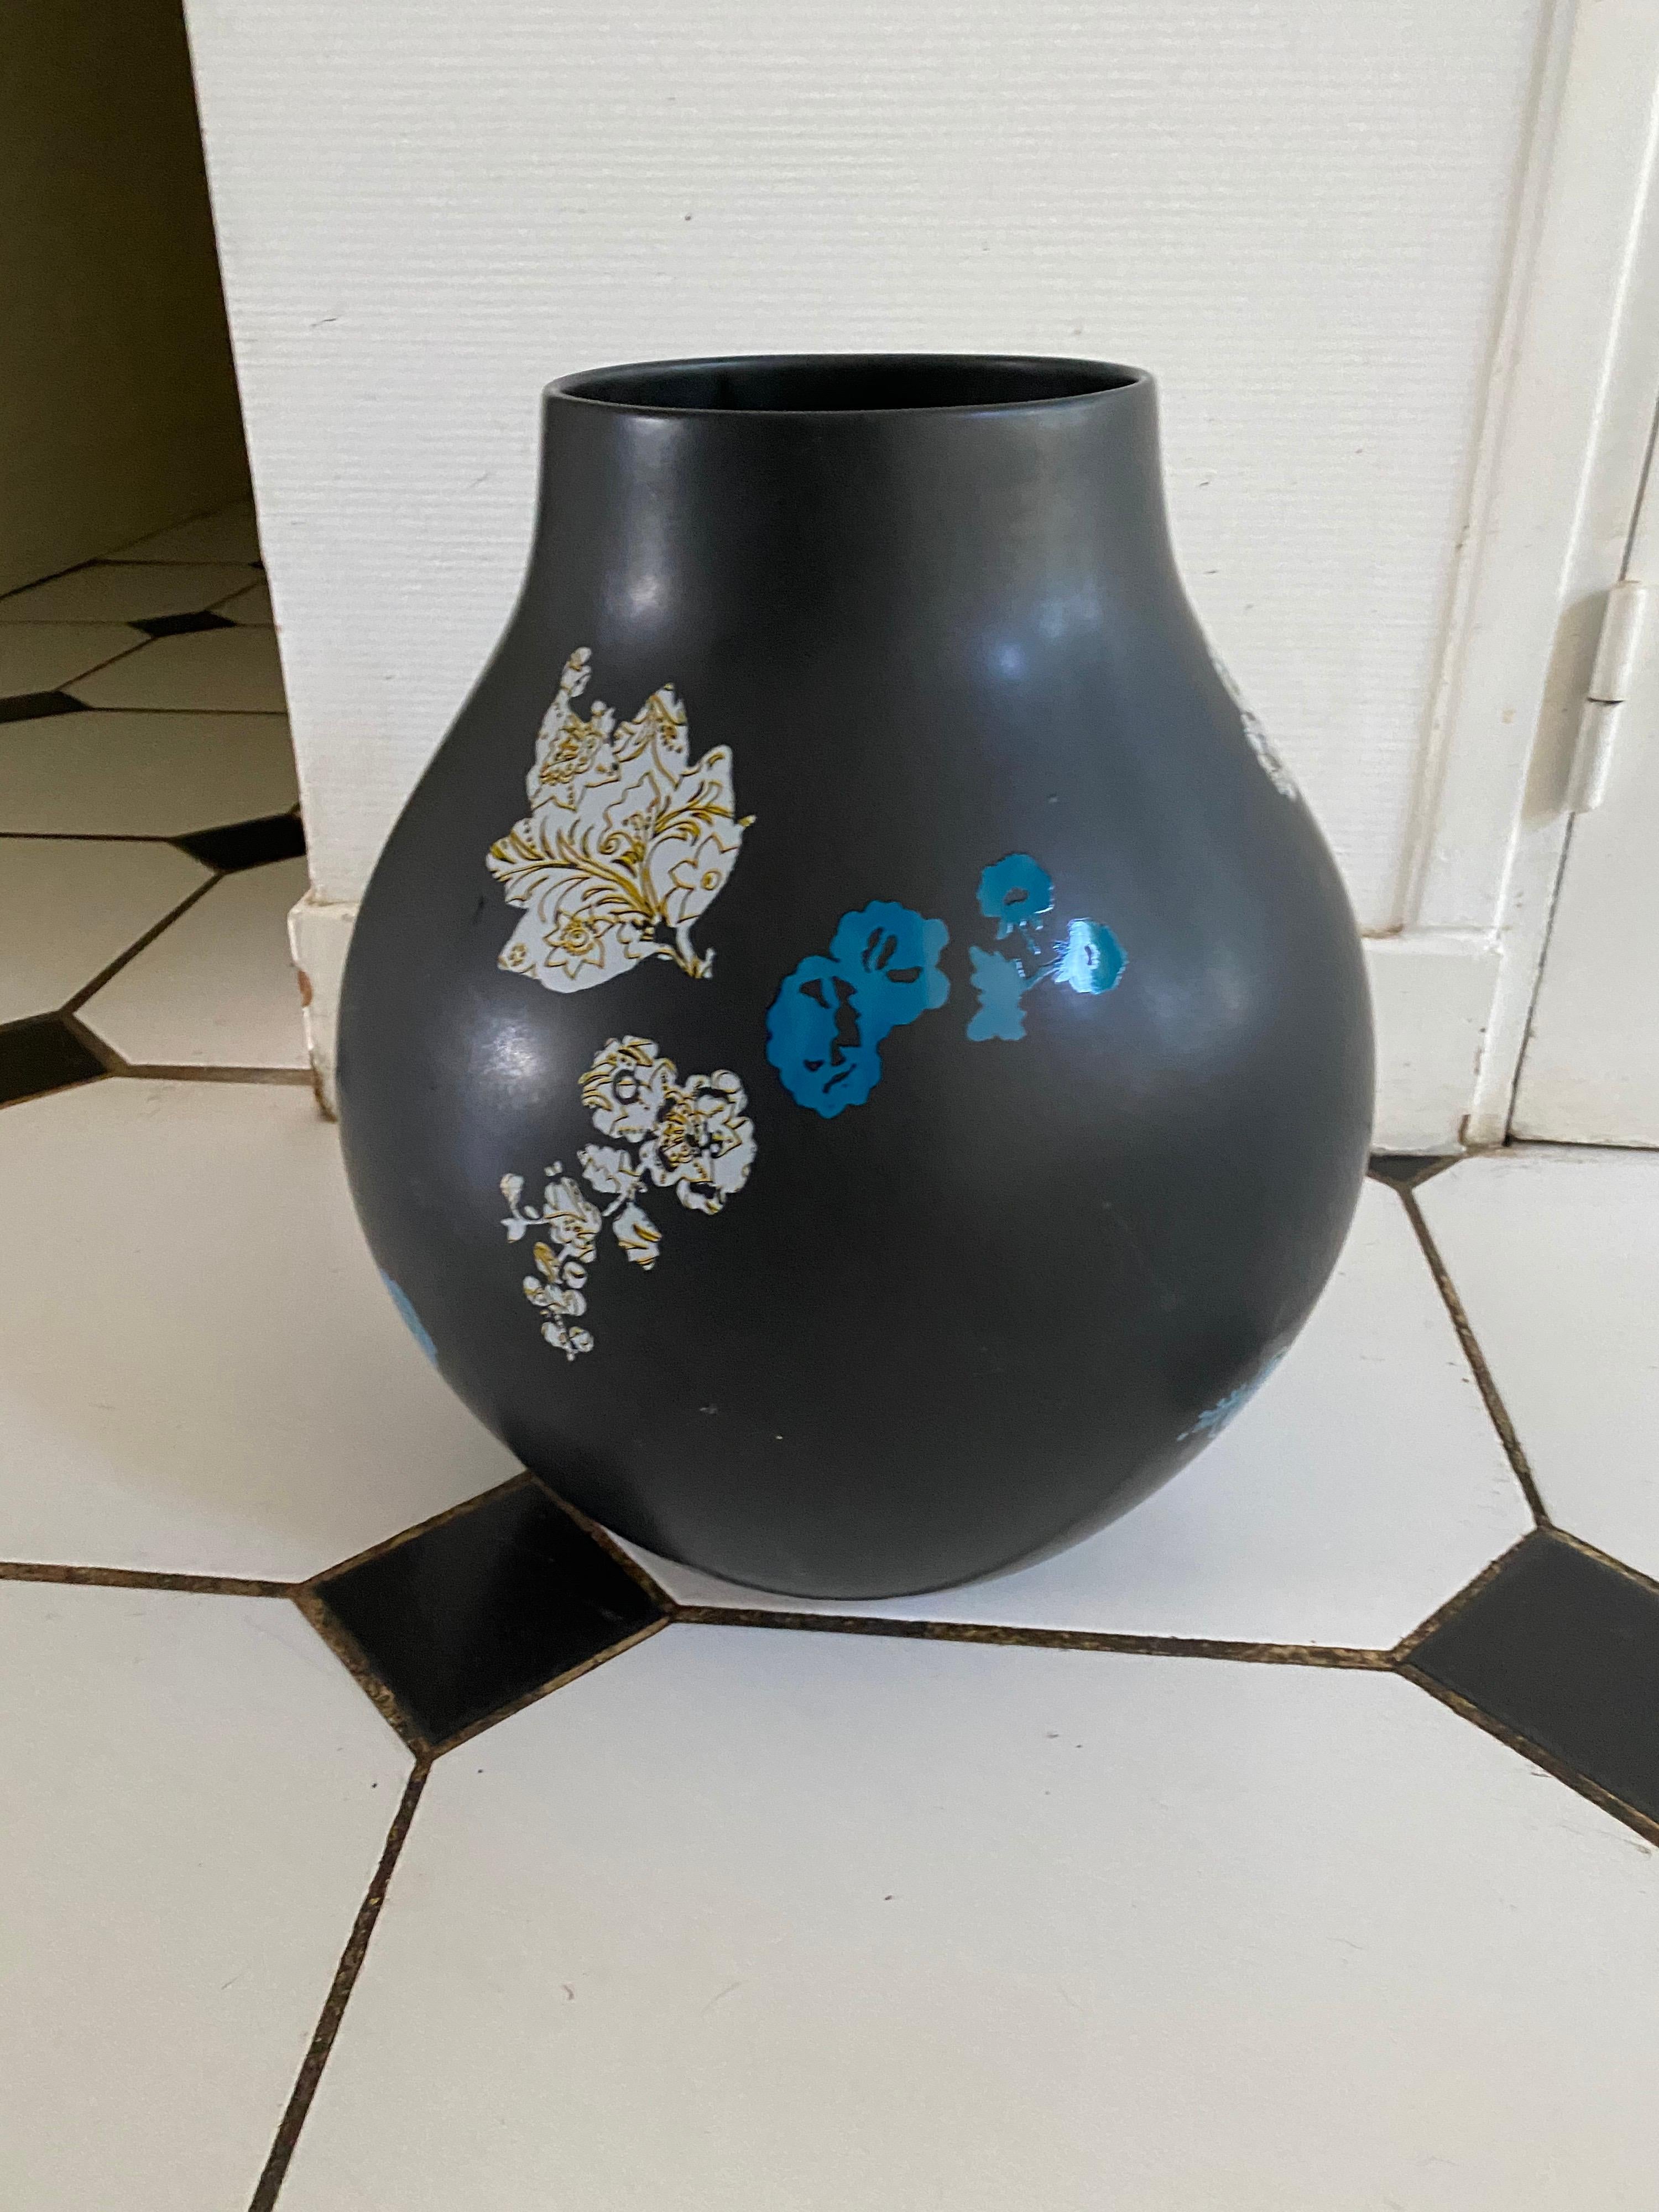 Gigantic ceramic vase with flowers decoration stamped Ikea, circa 1990.